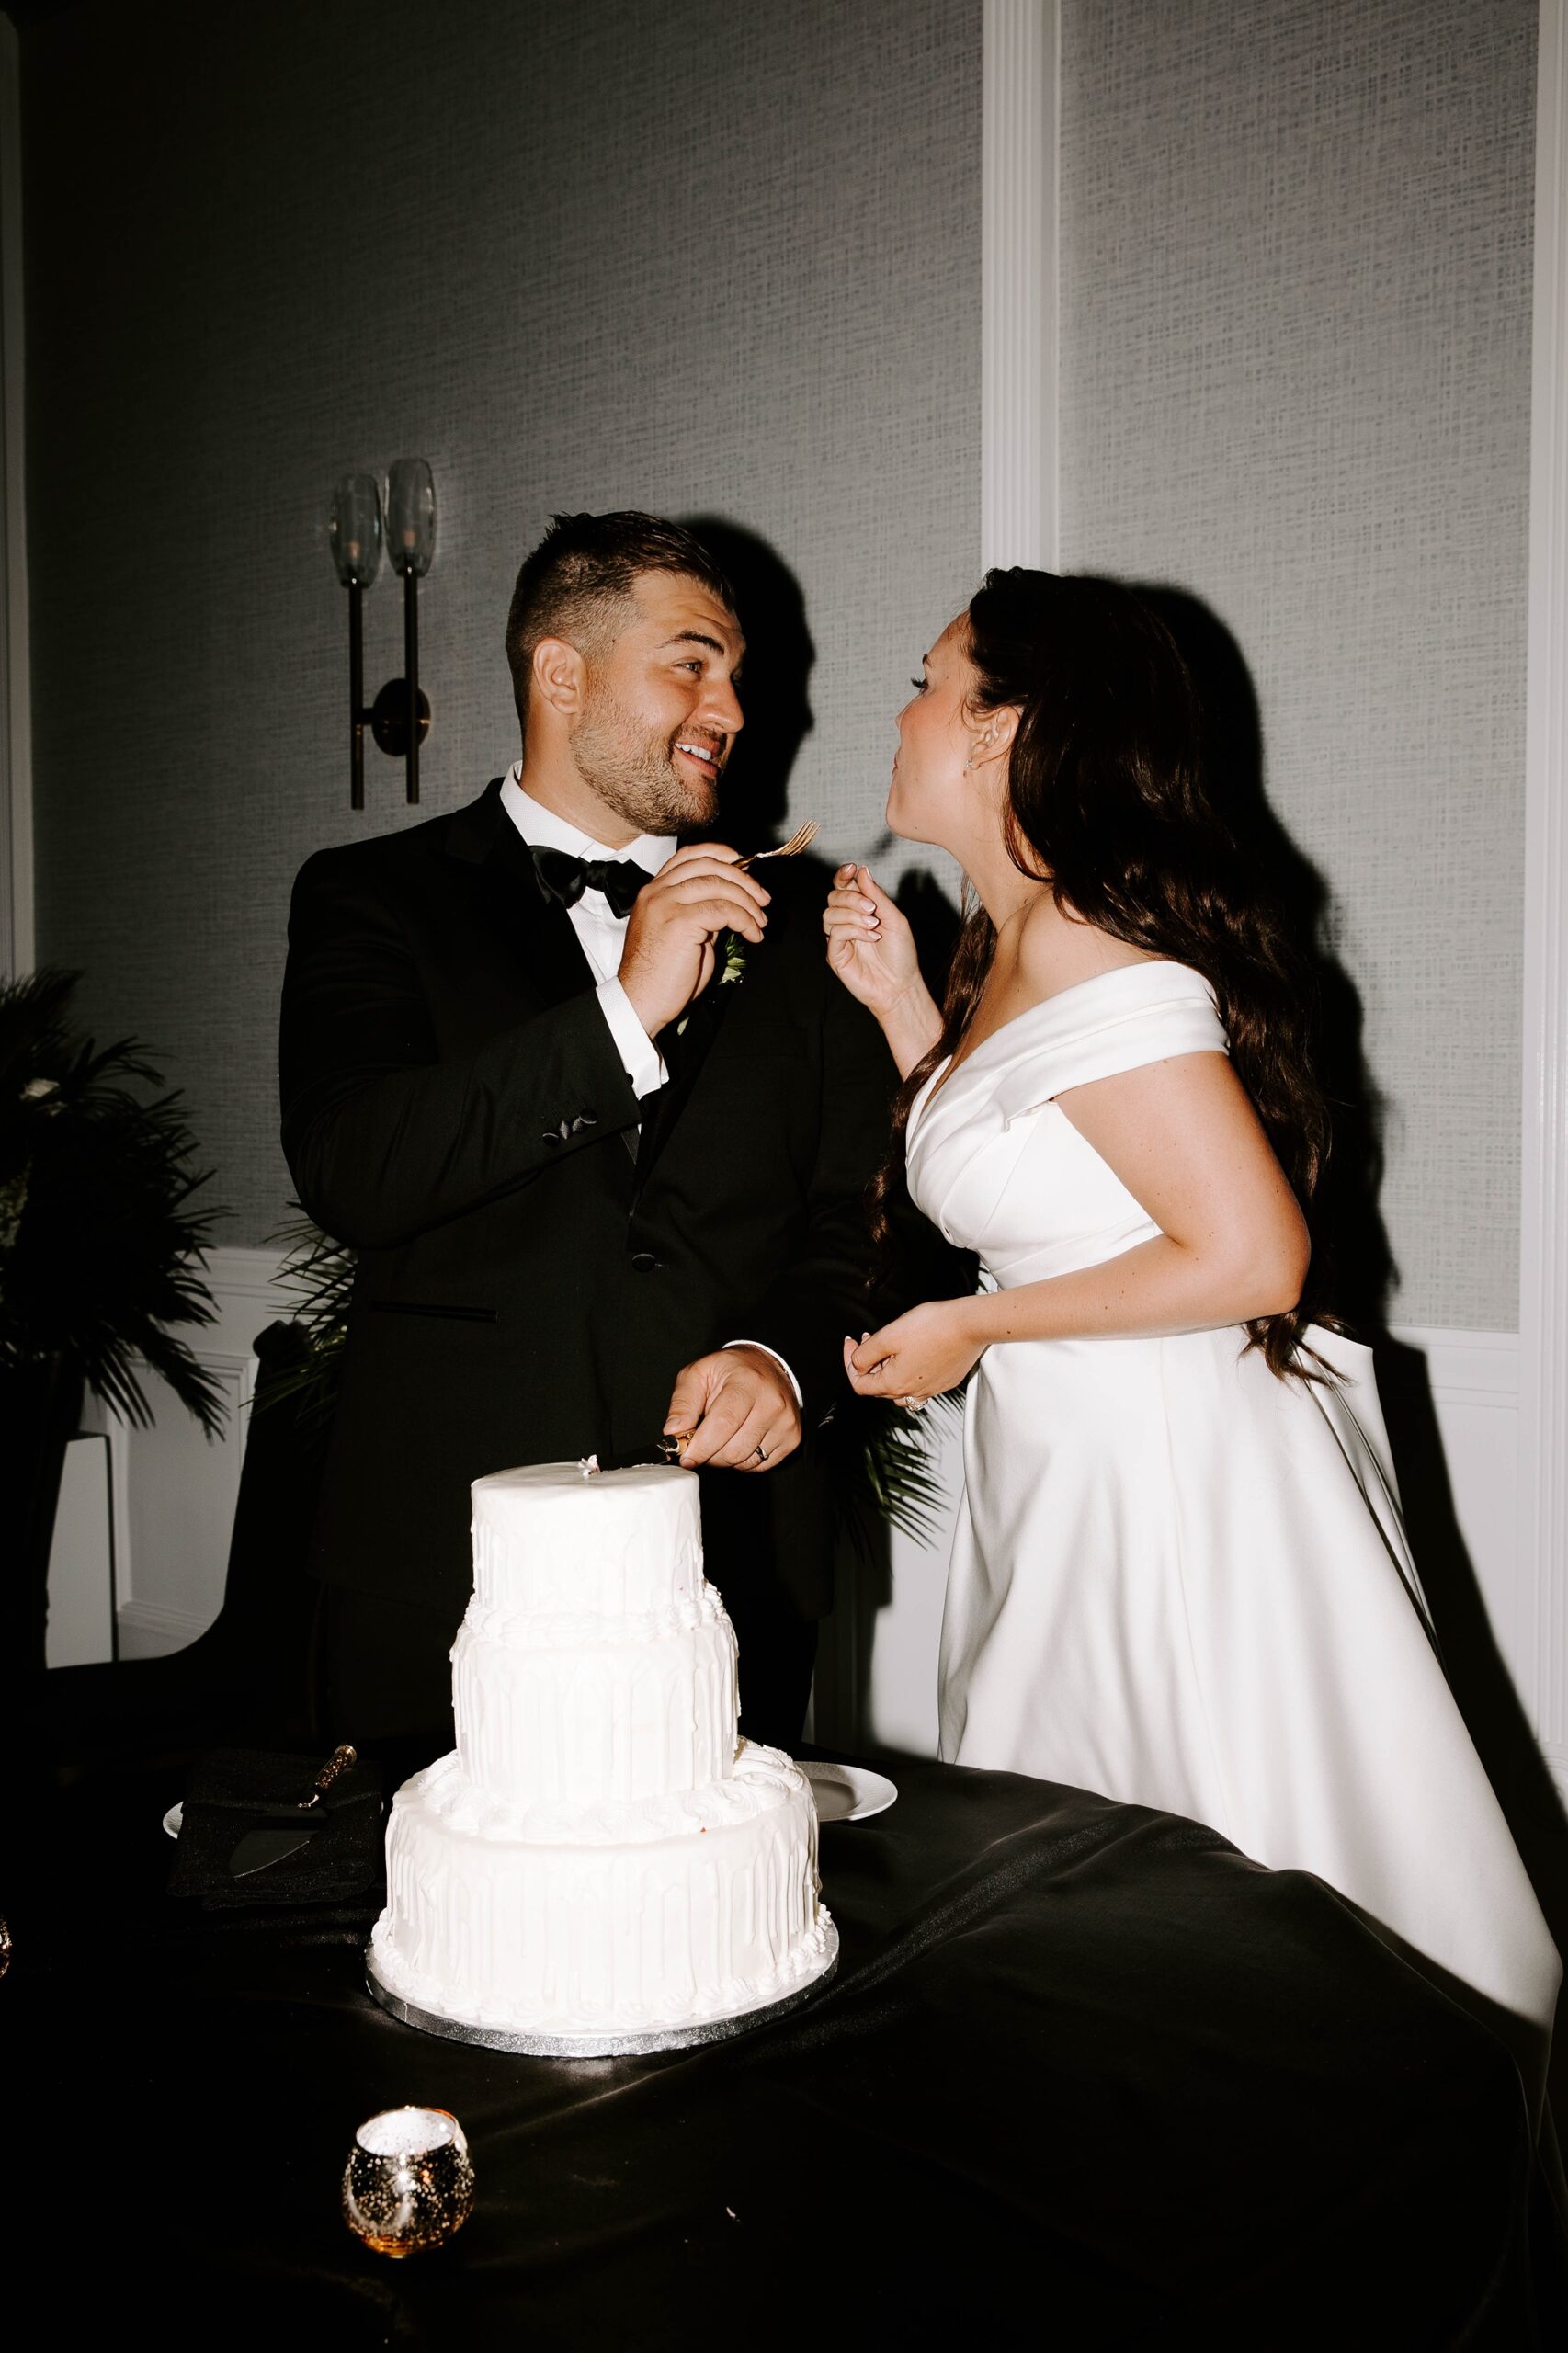 Bride and groom cut cake at Farmington Polo Club wedding reception